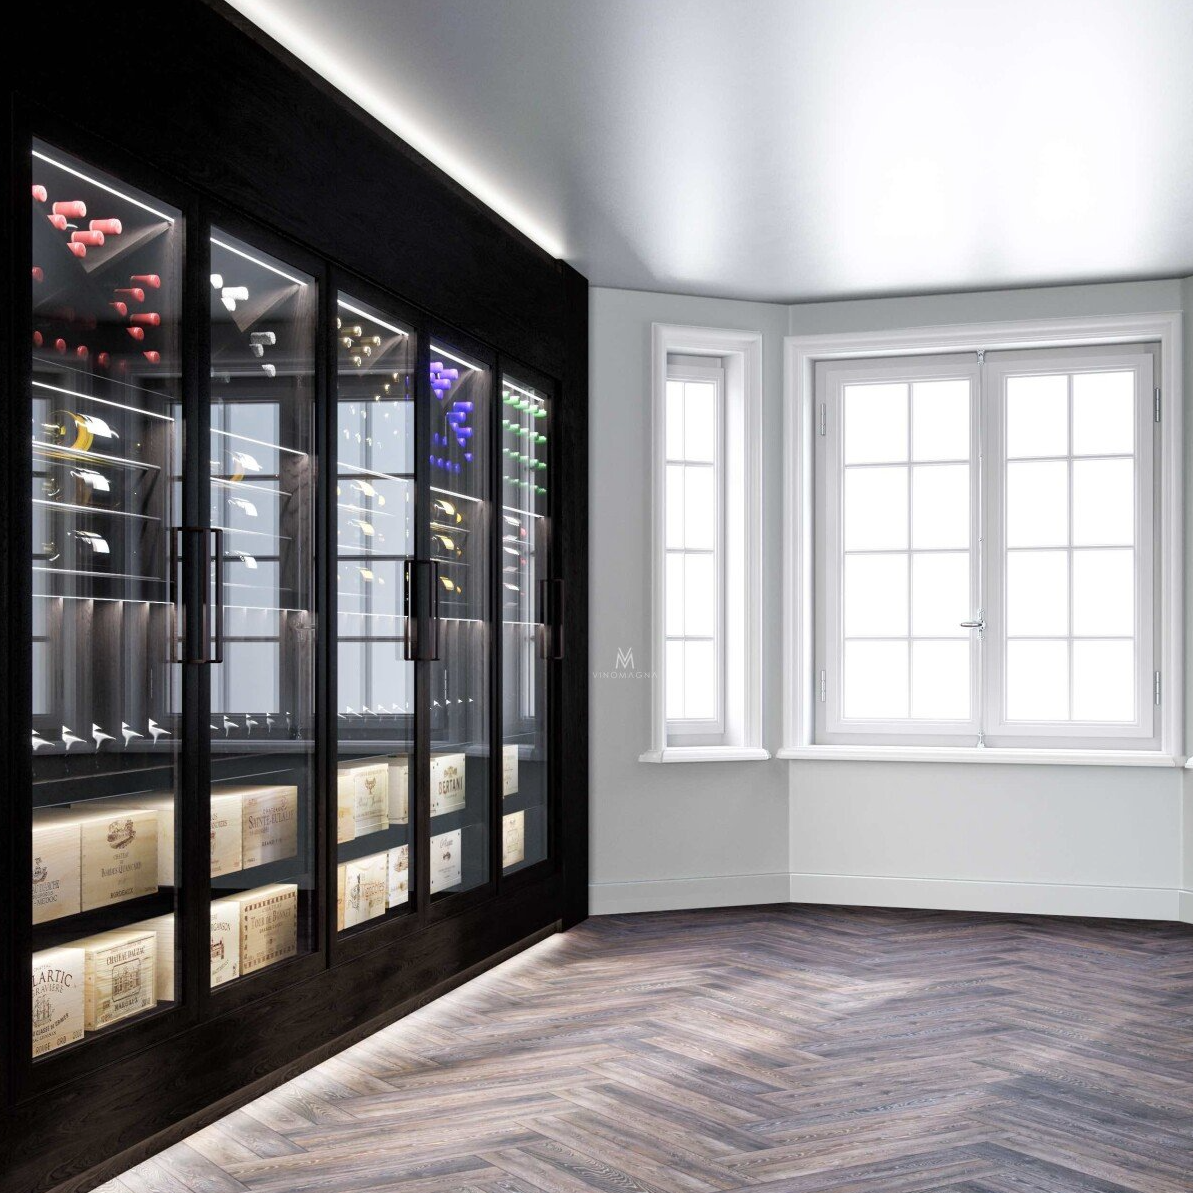 Home Wine Cellar In London Design And Installation London Vinomagna